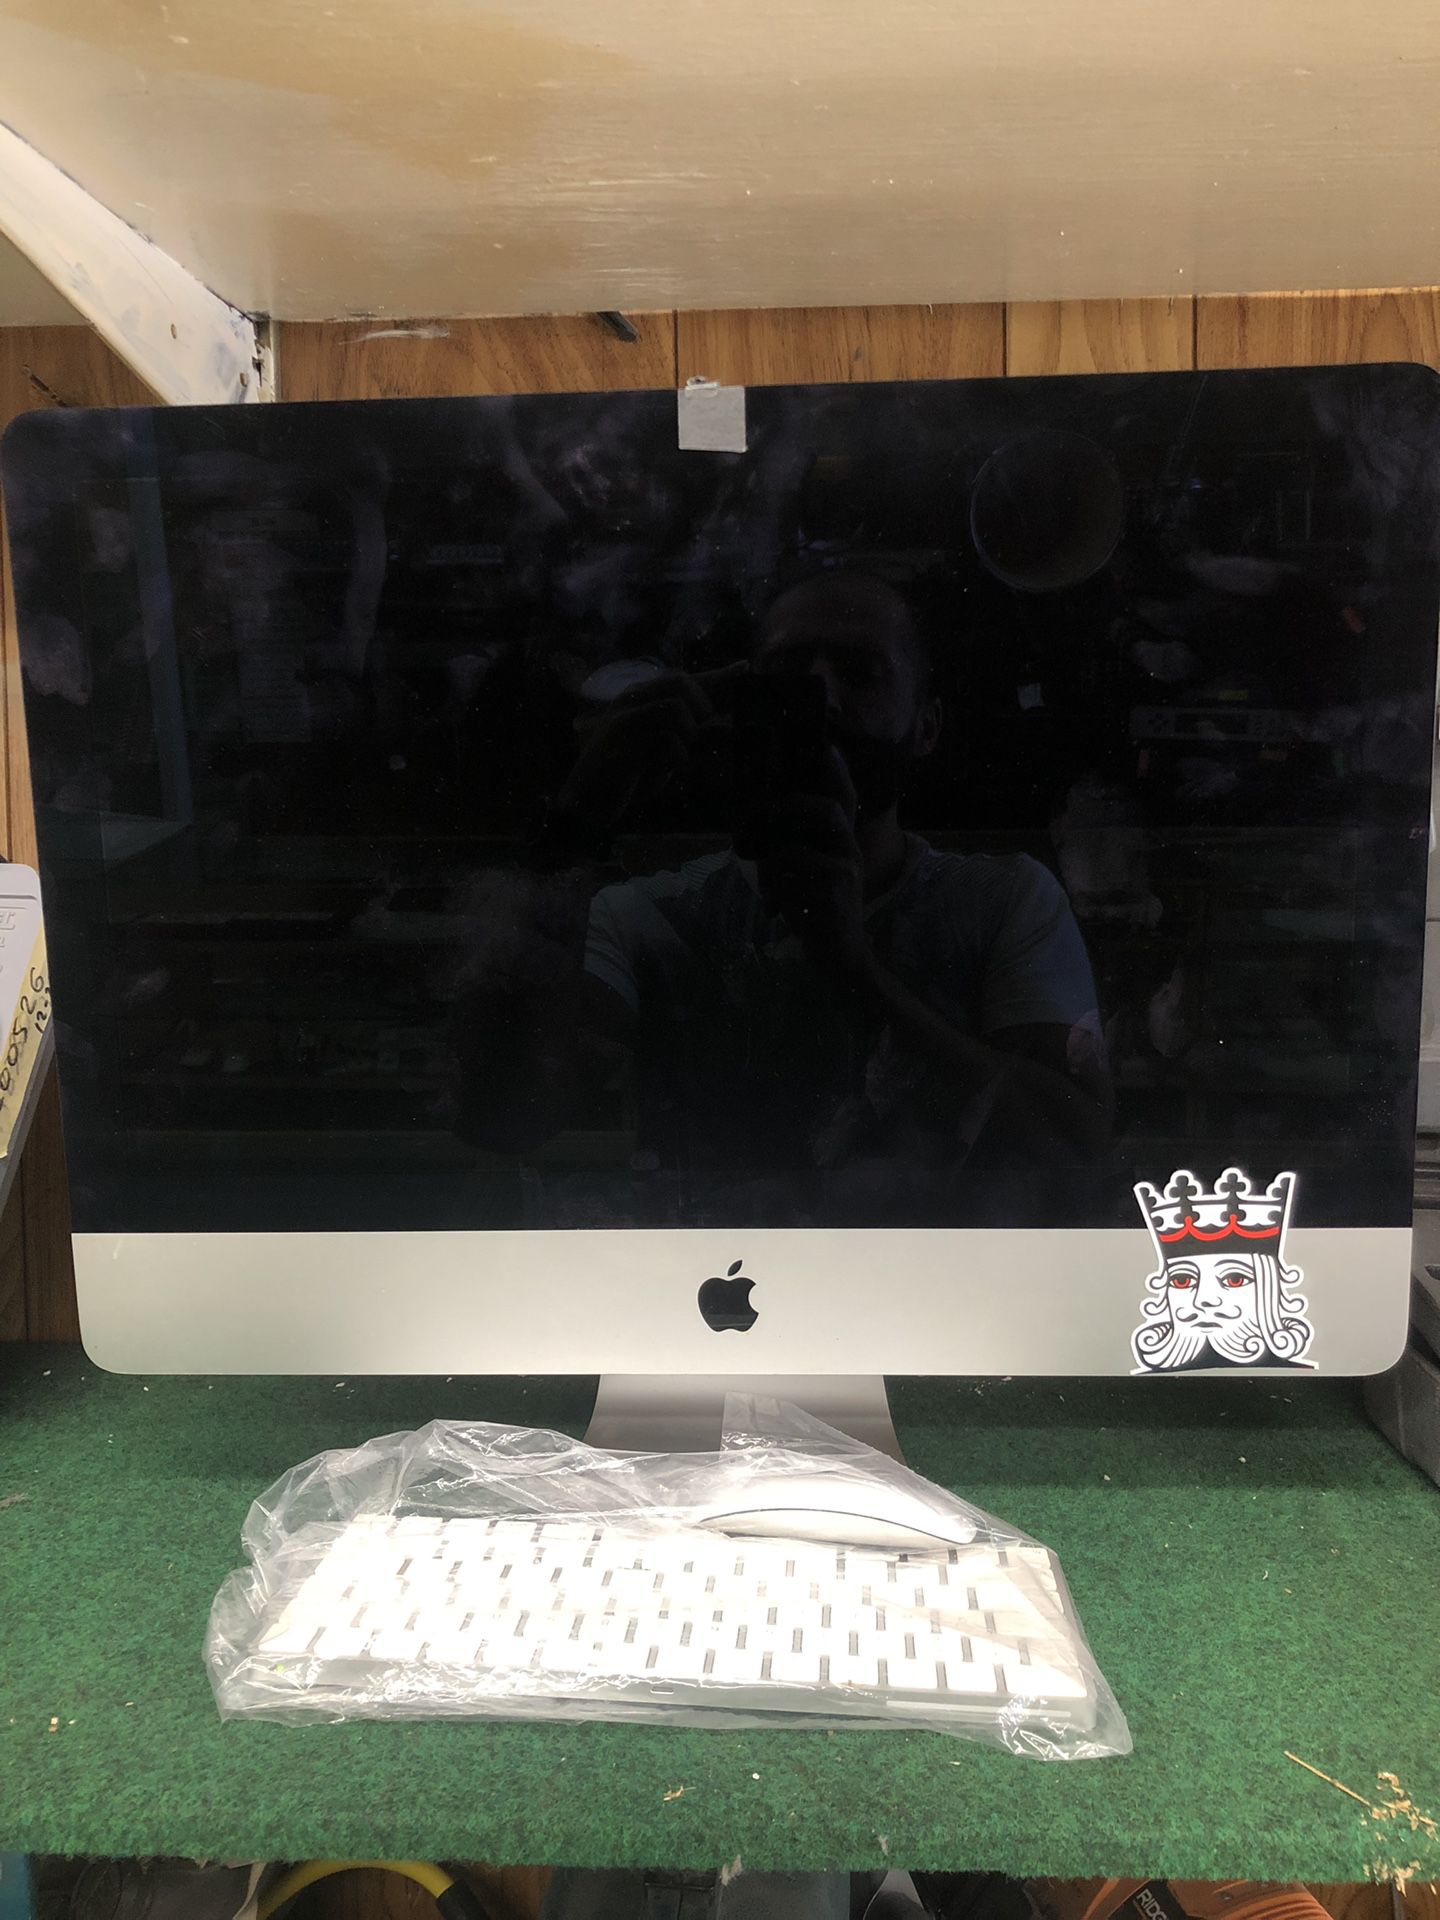 Apple iMac with Keyboard